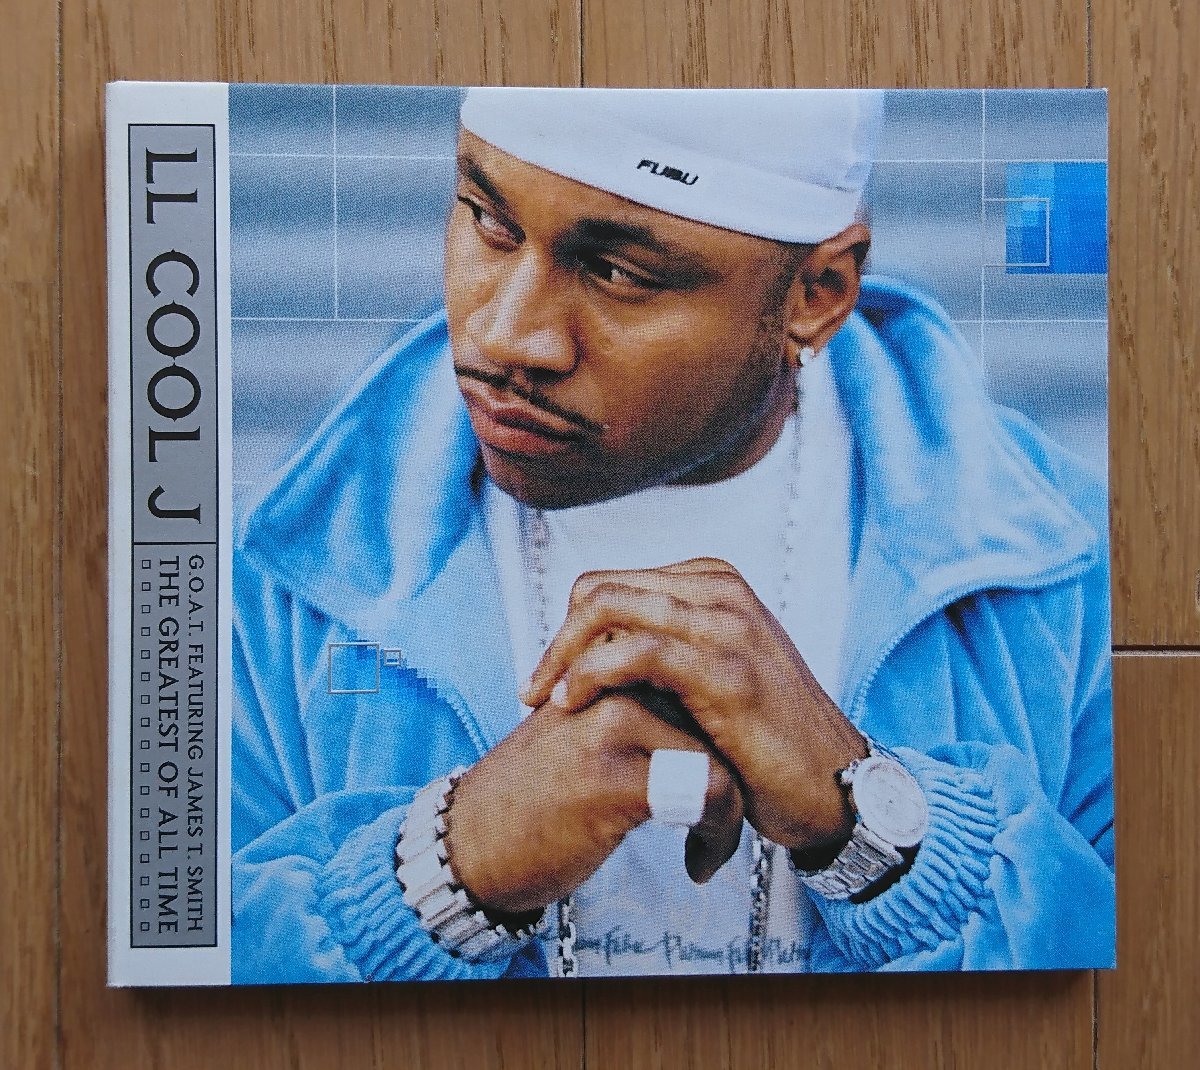 【CD・サンプル盤】G.O.A.T. / LL クール J -G.O.A.T./LL COOL J- UICD-6001 ※帯・歌詞付き_画像1